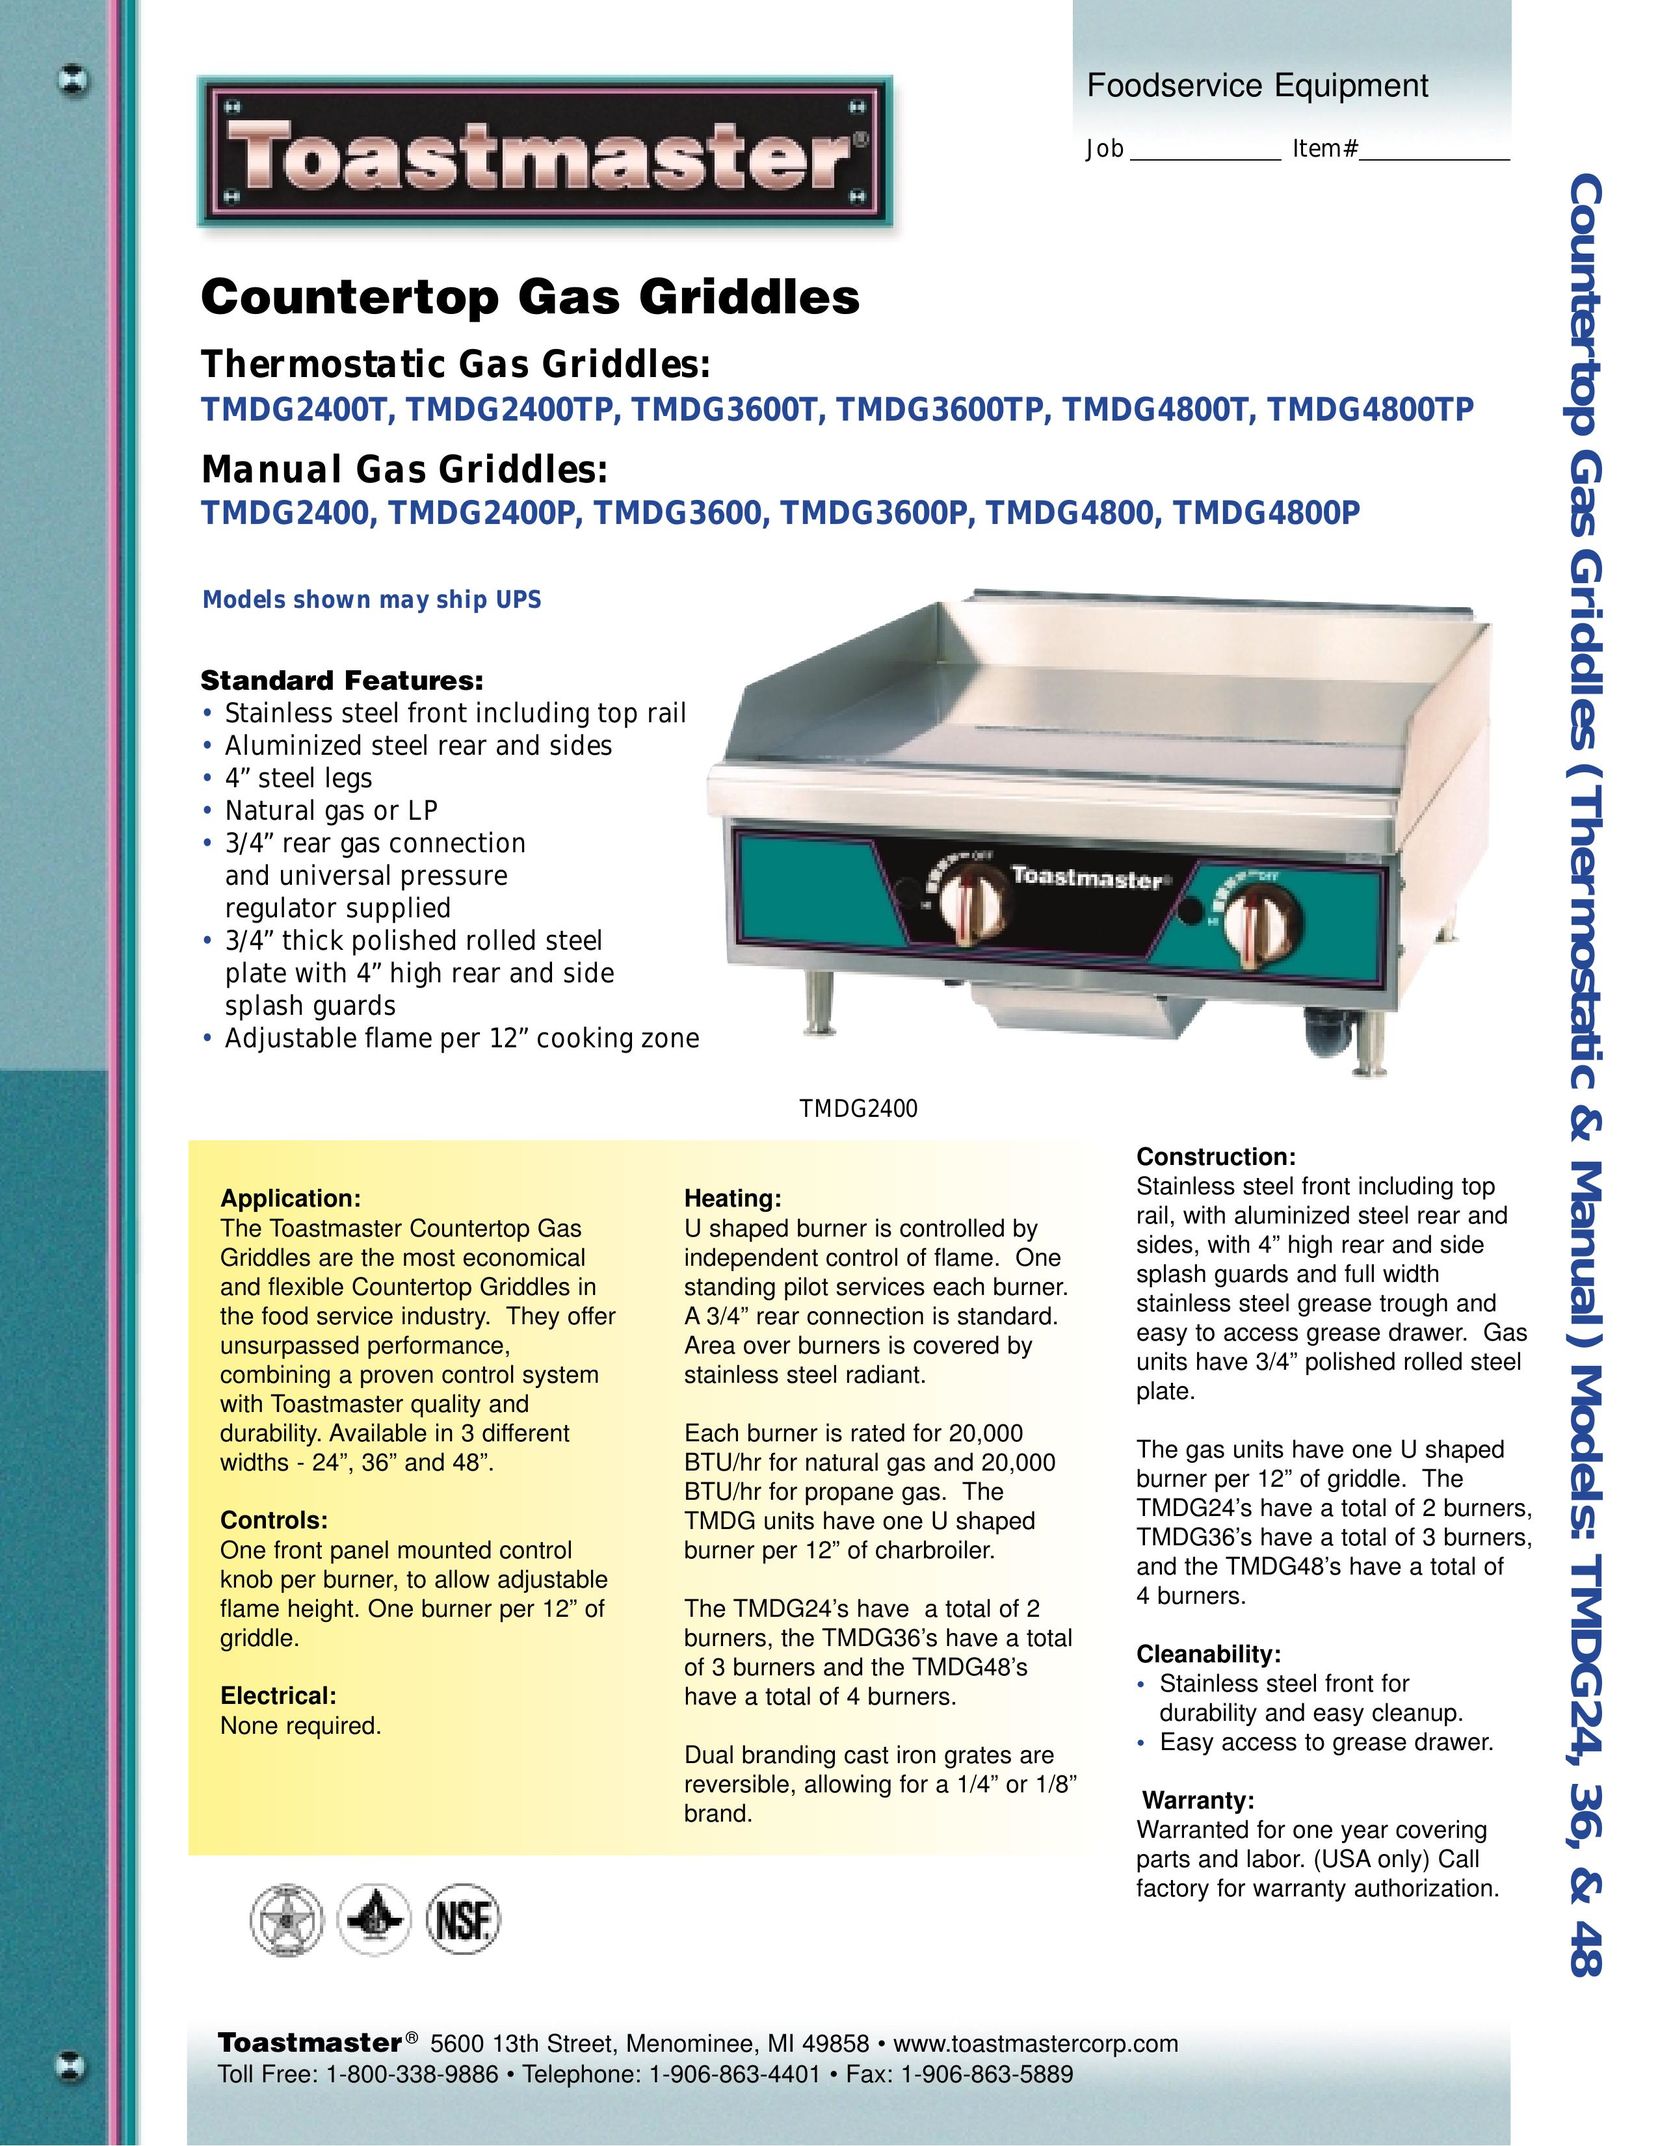 Toastmaster TMDG3600T Griddle User Manual